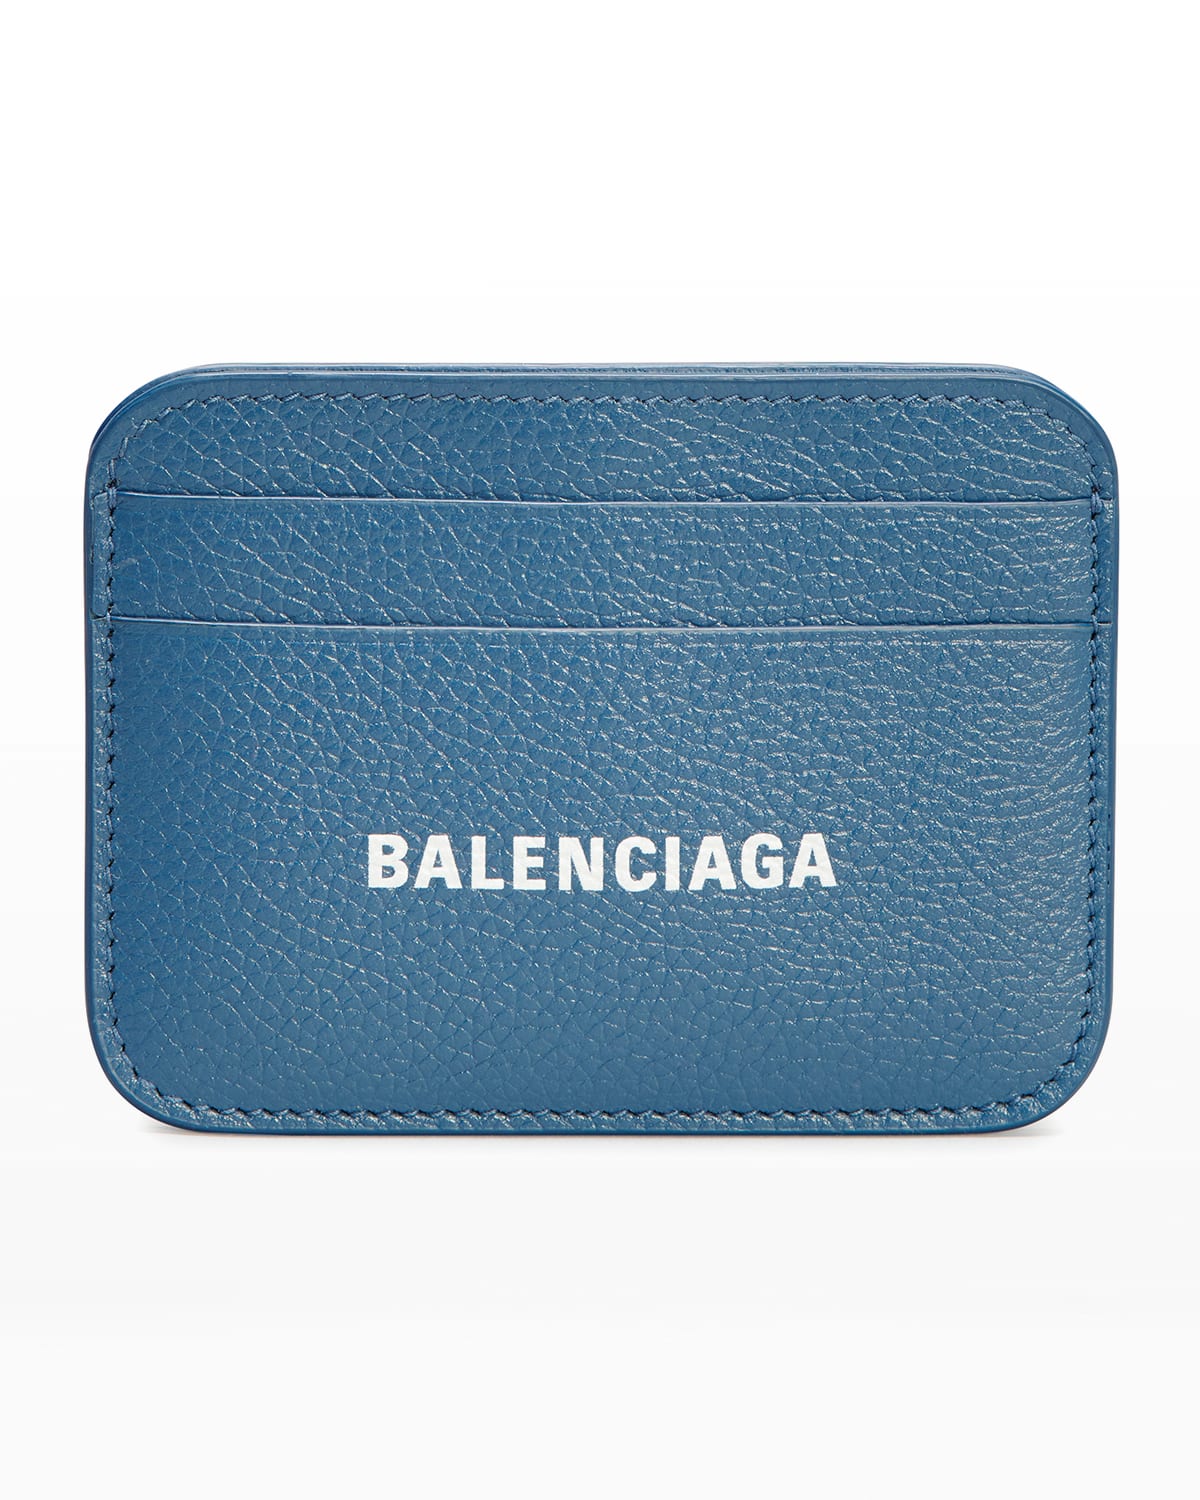 Balenciaga Cash Card Holder - Grained Calf